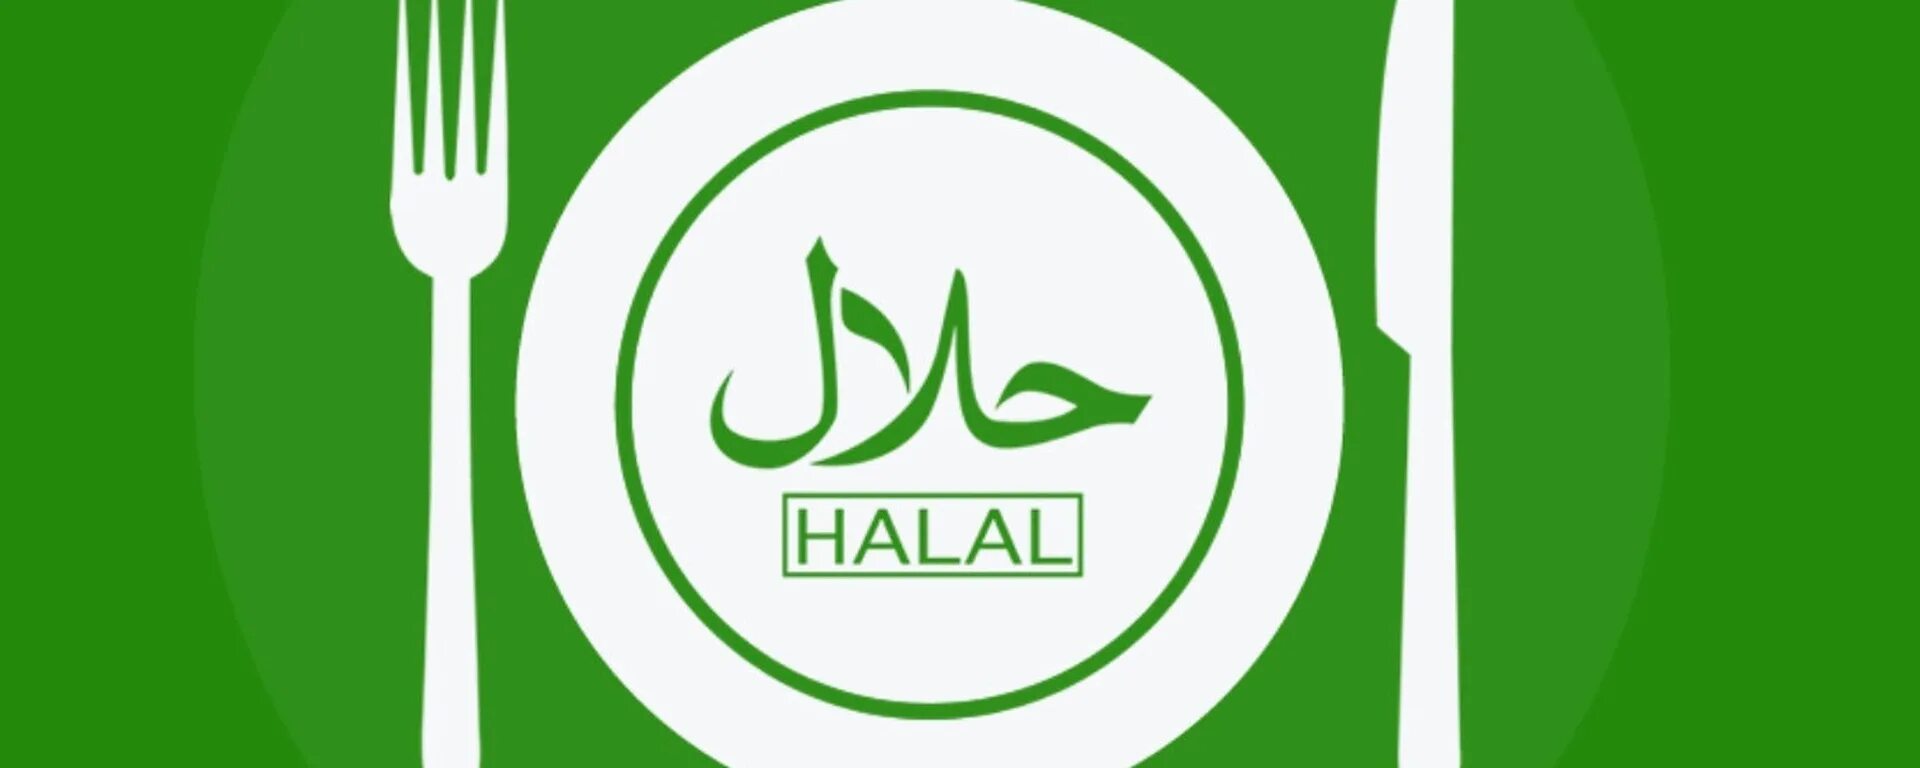 Столовая халяль. Халяль. Эмблема Халяль. Логотип кафе Халяль. Значок Халяль зеленый.